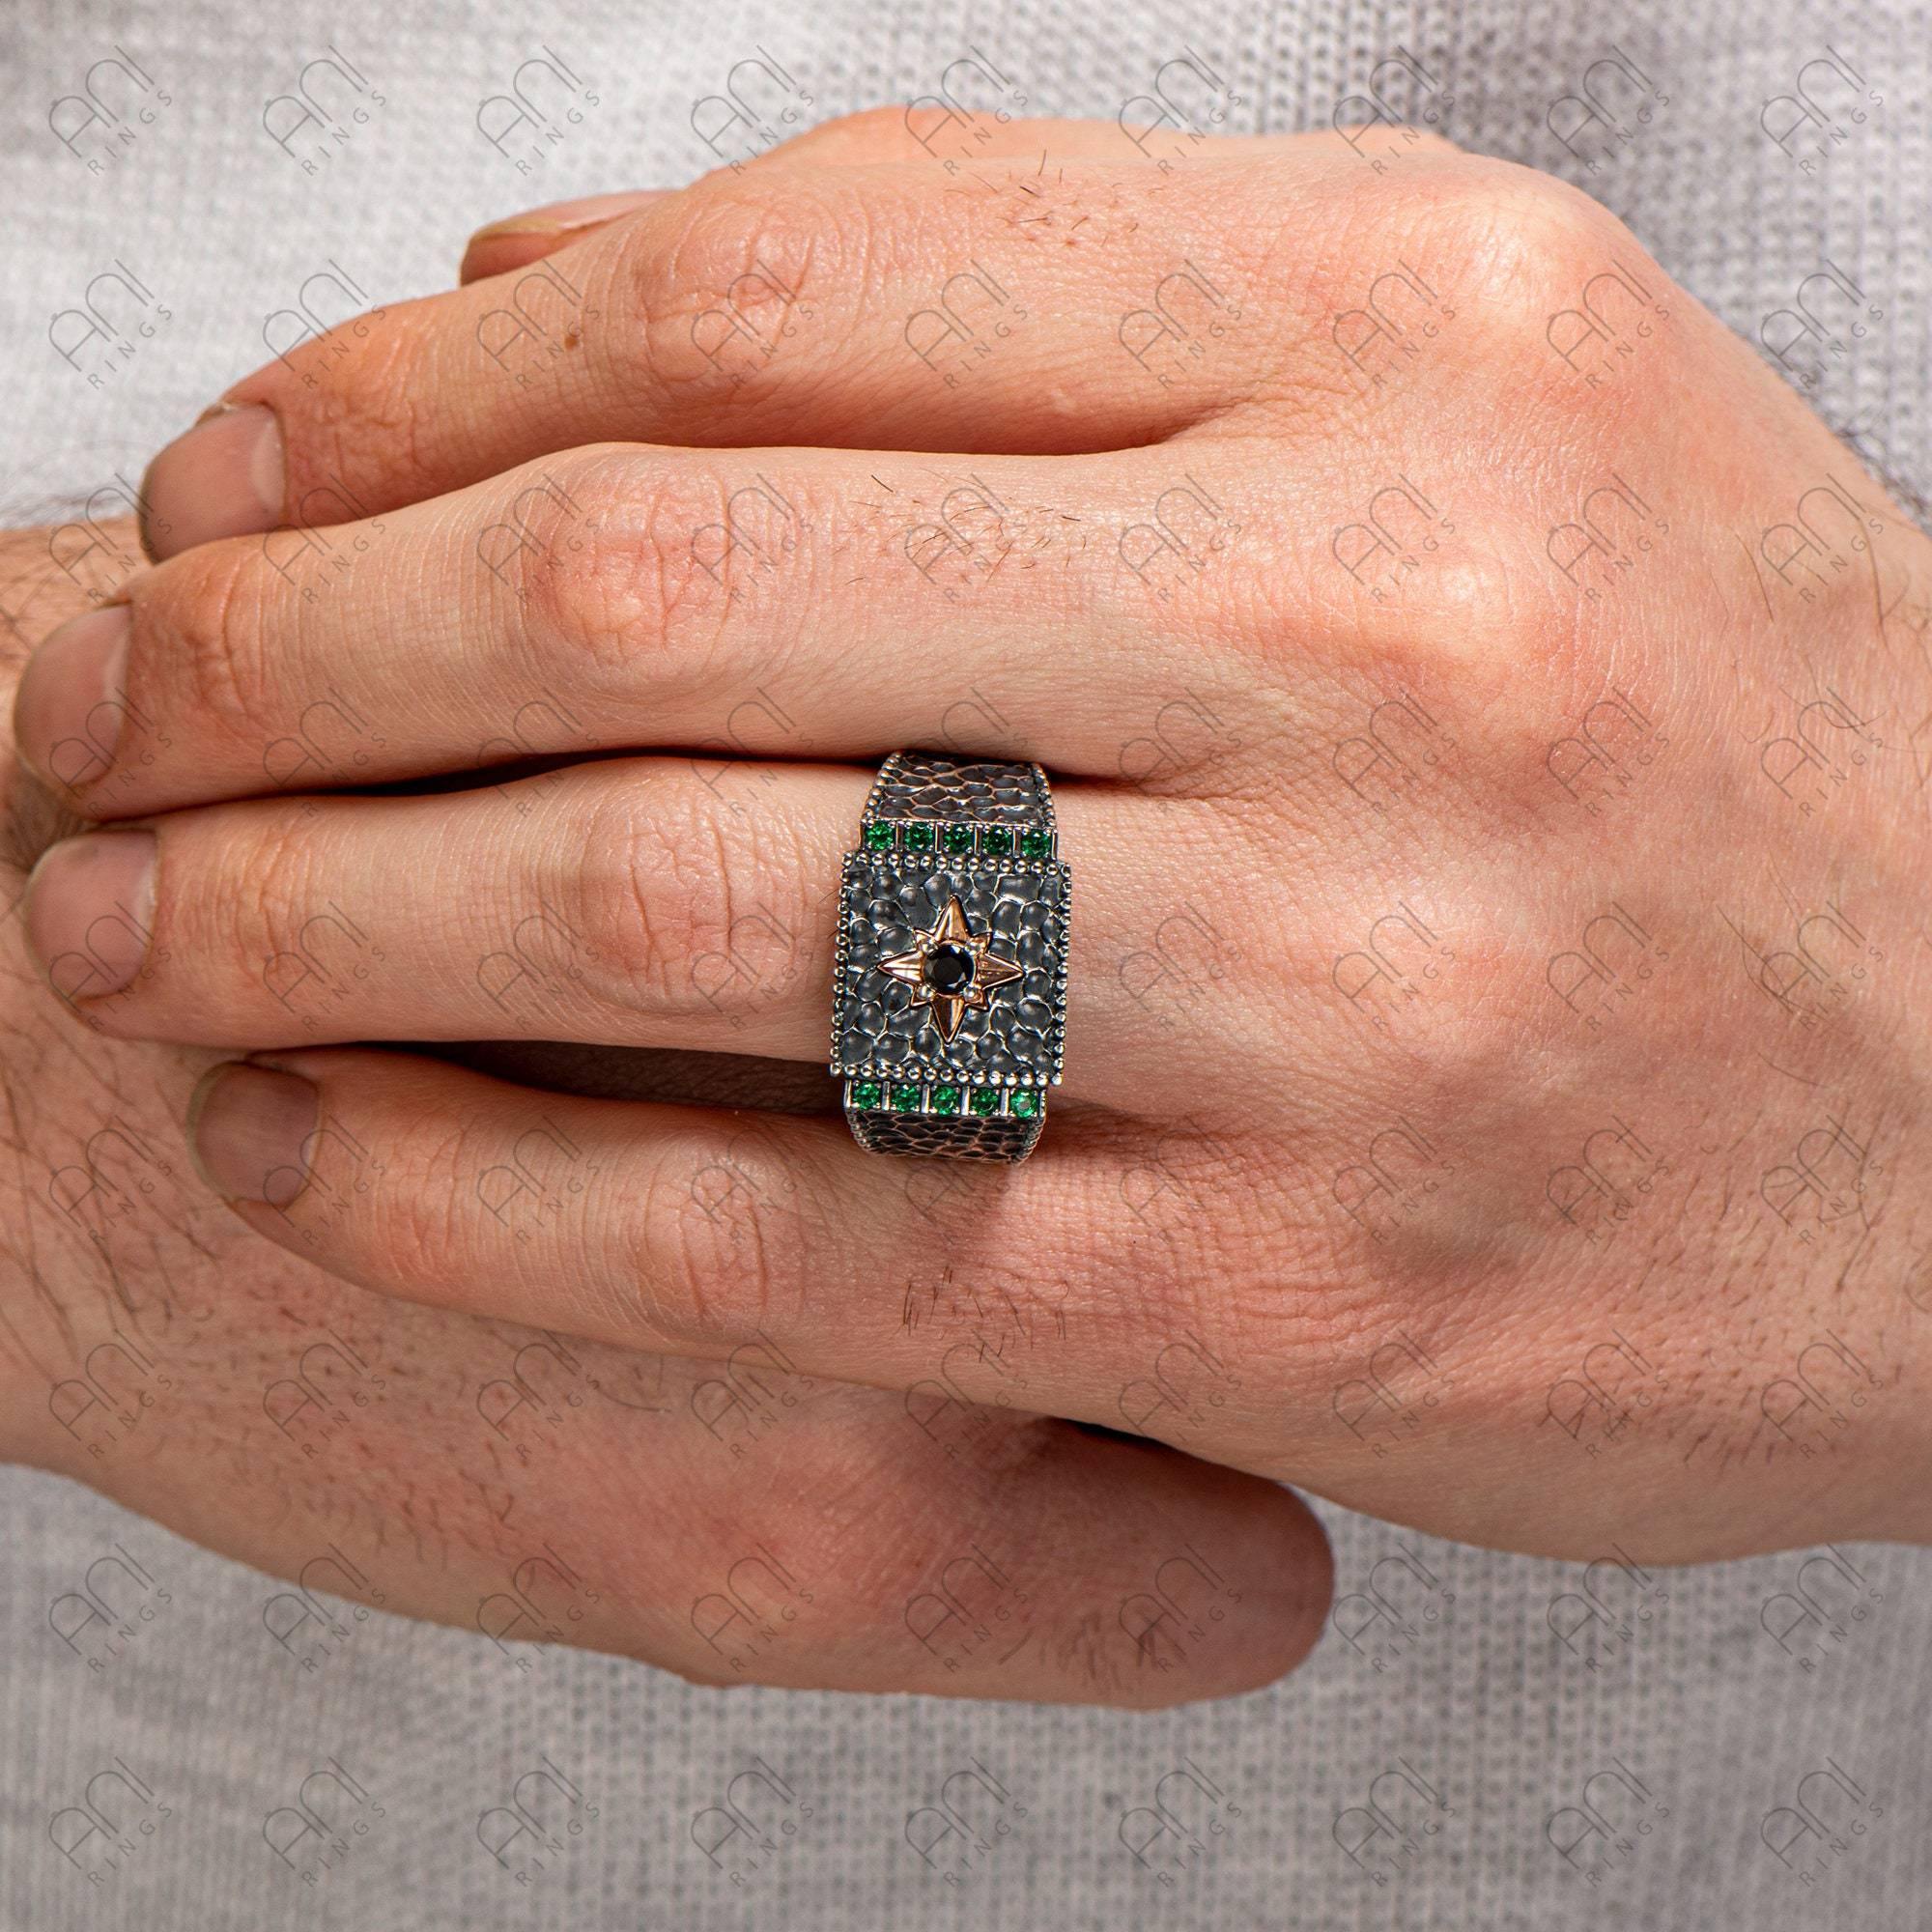 North Star Silver Men Handmade Ring, Red Zircon Gemstone Ring - OXO SILVER